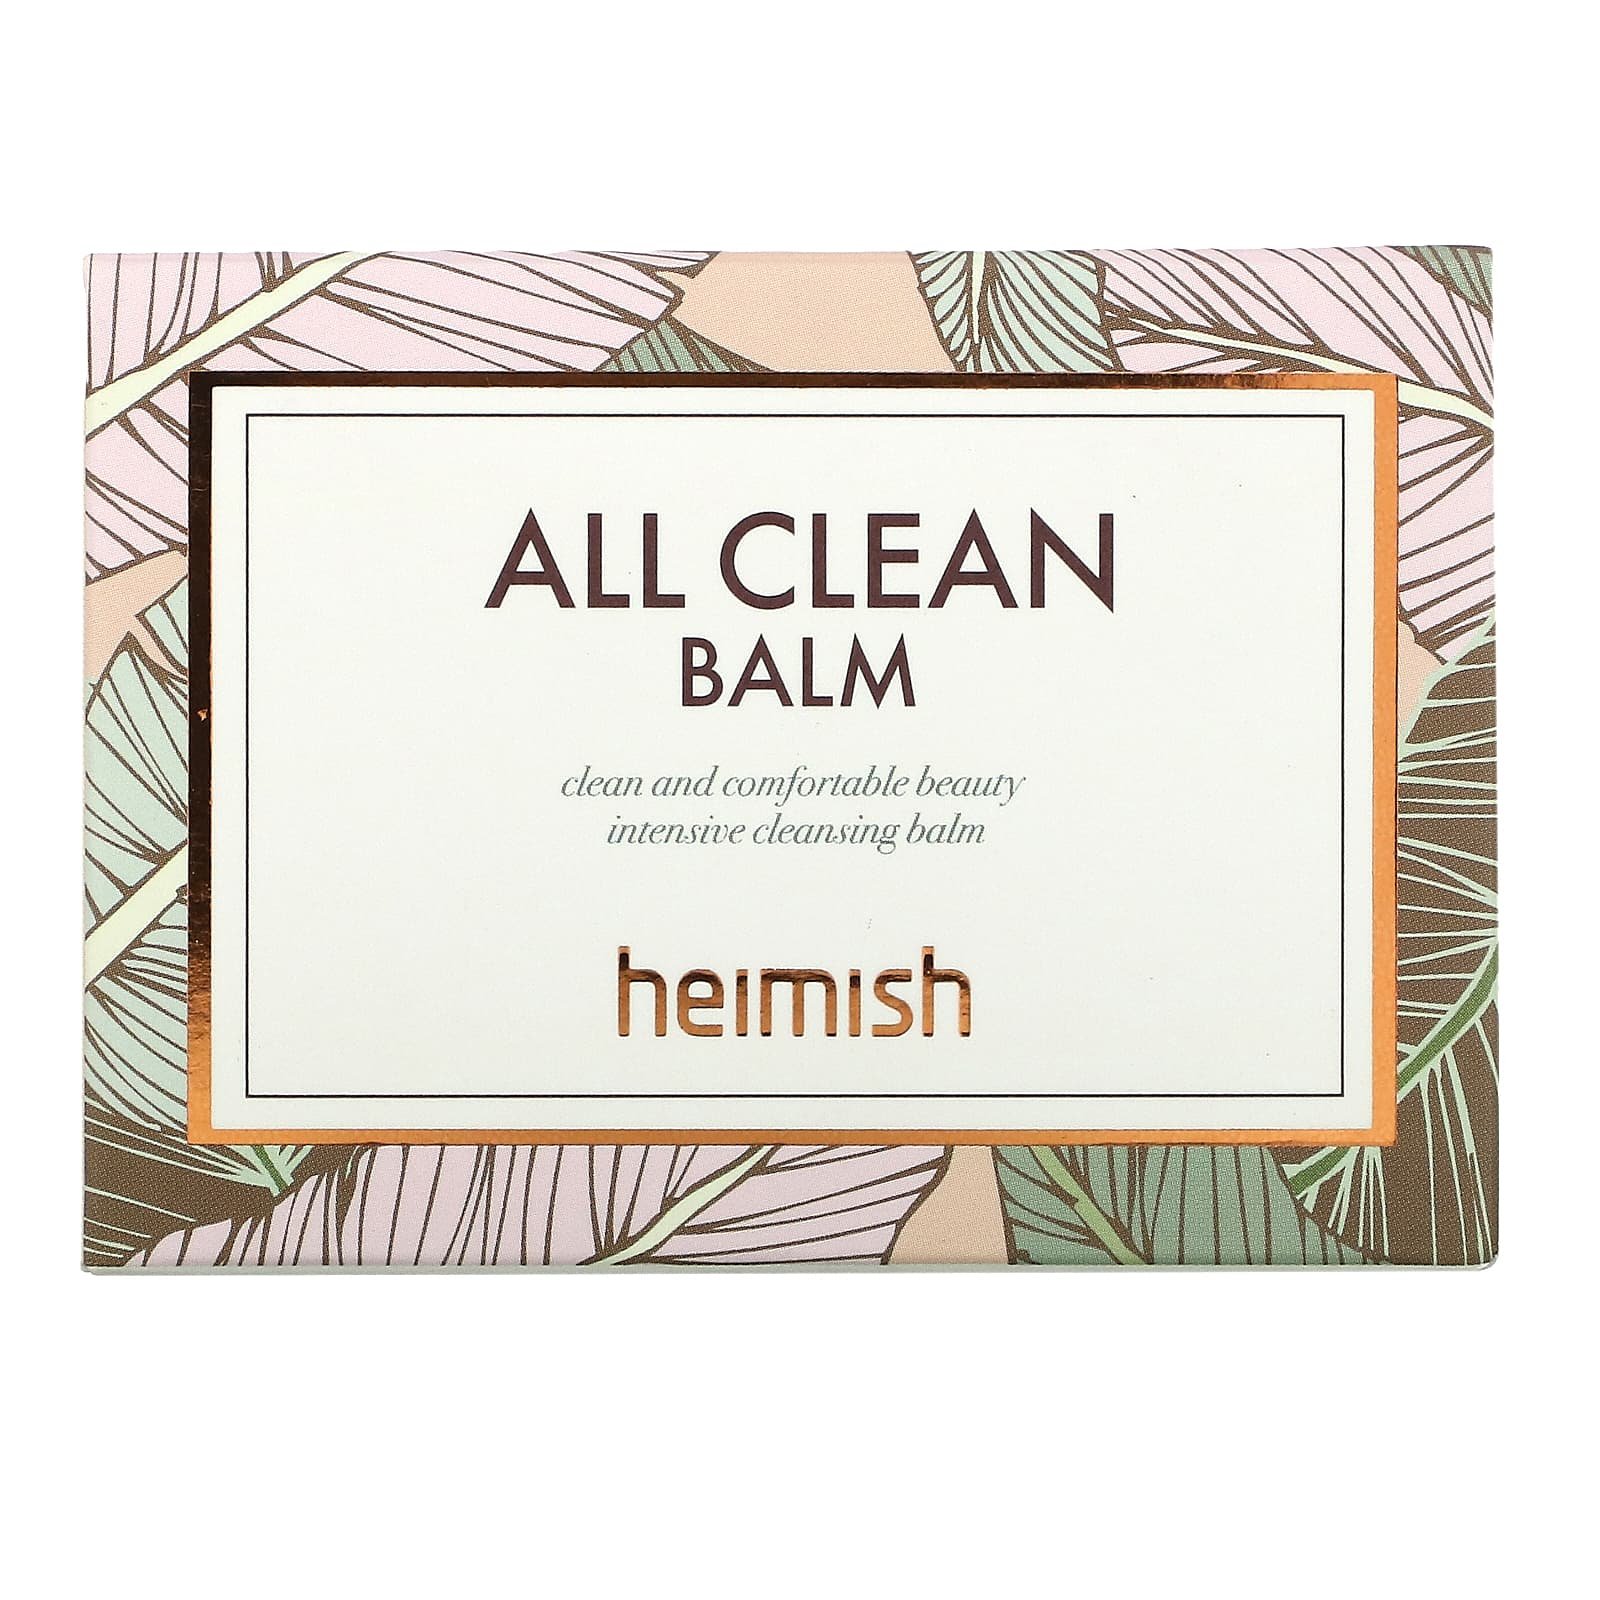 Heimish All Clean Balm Benefits